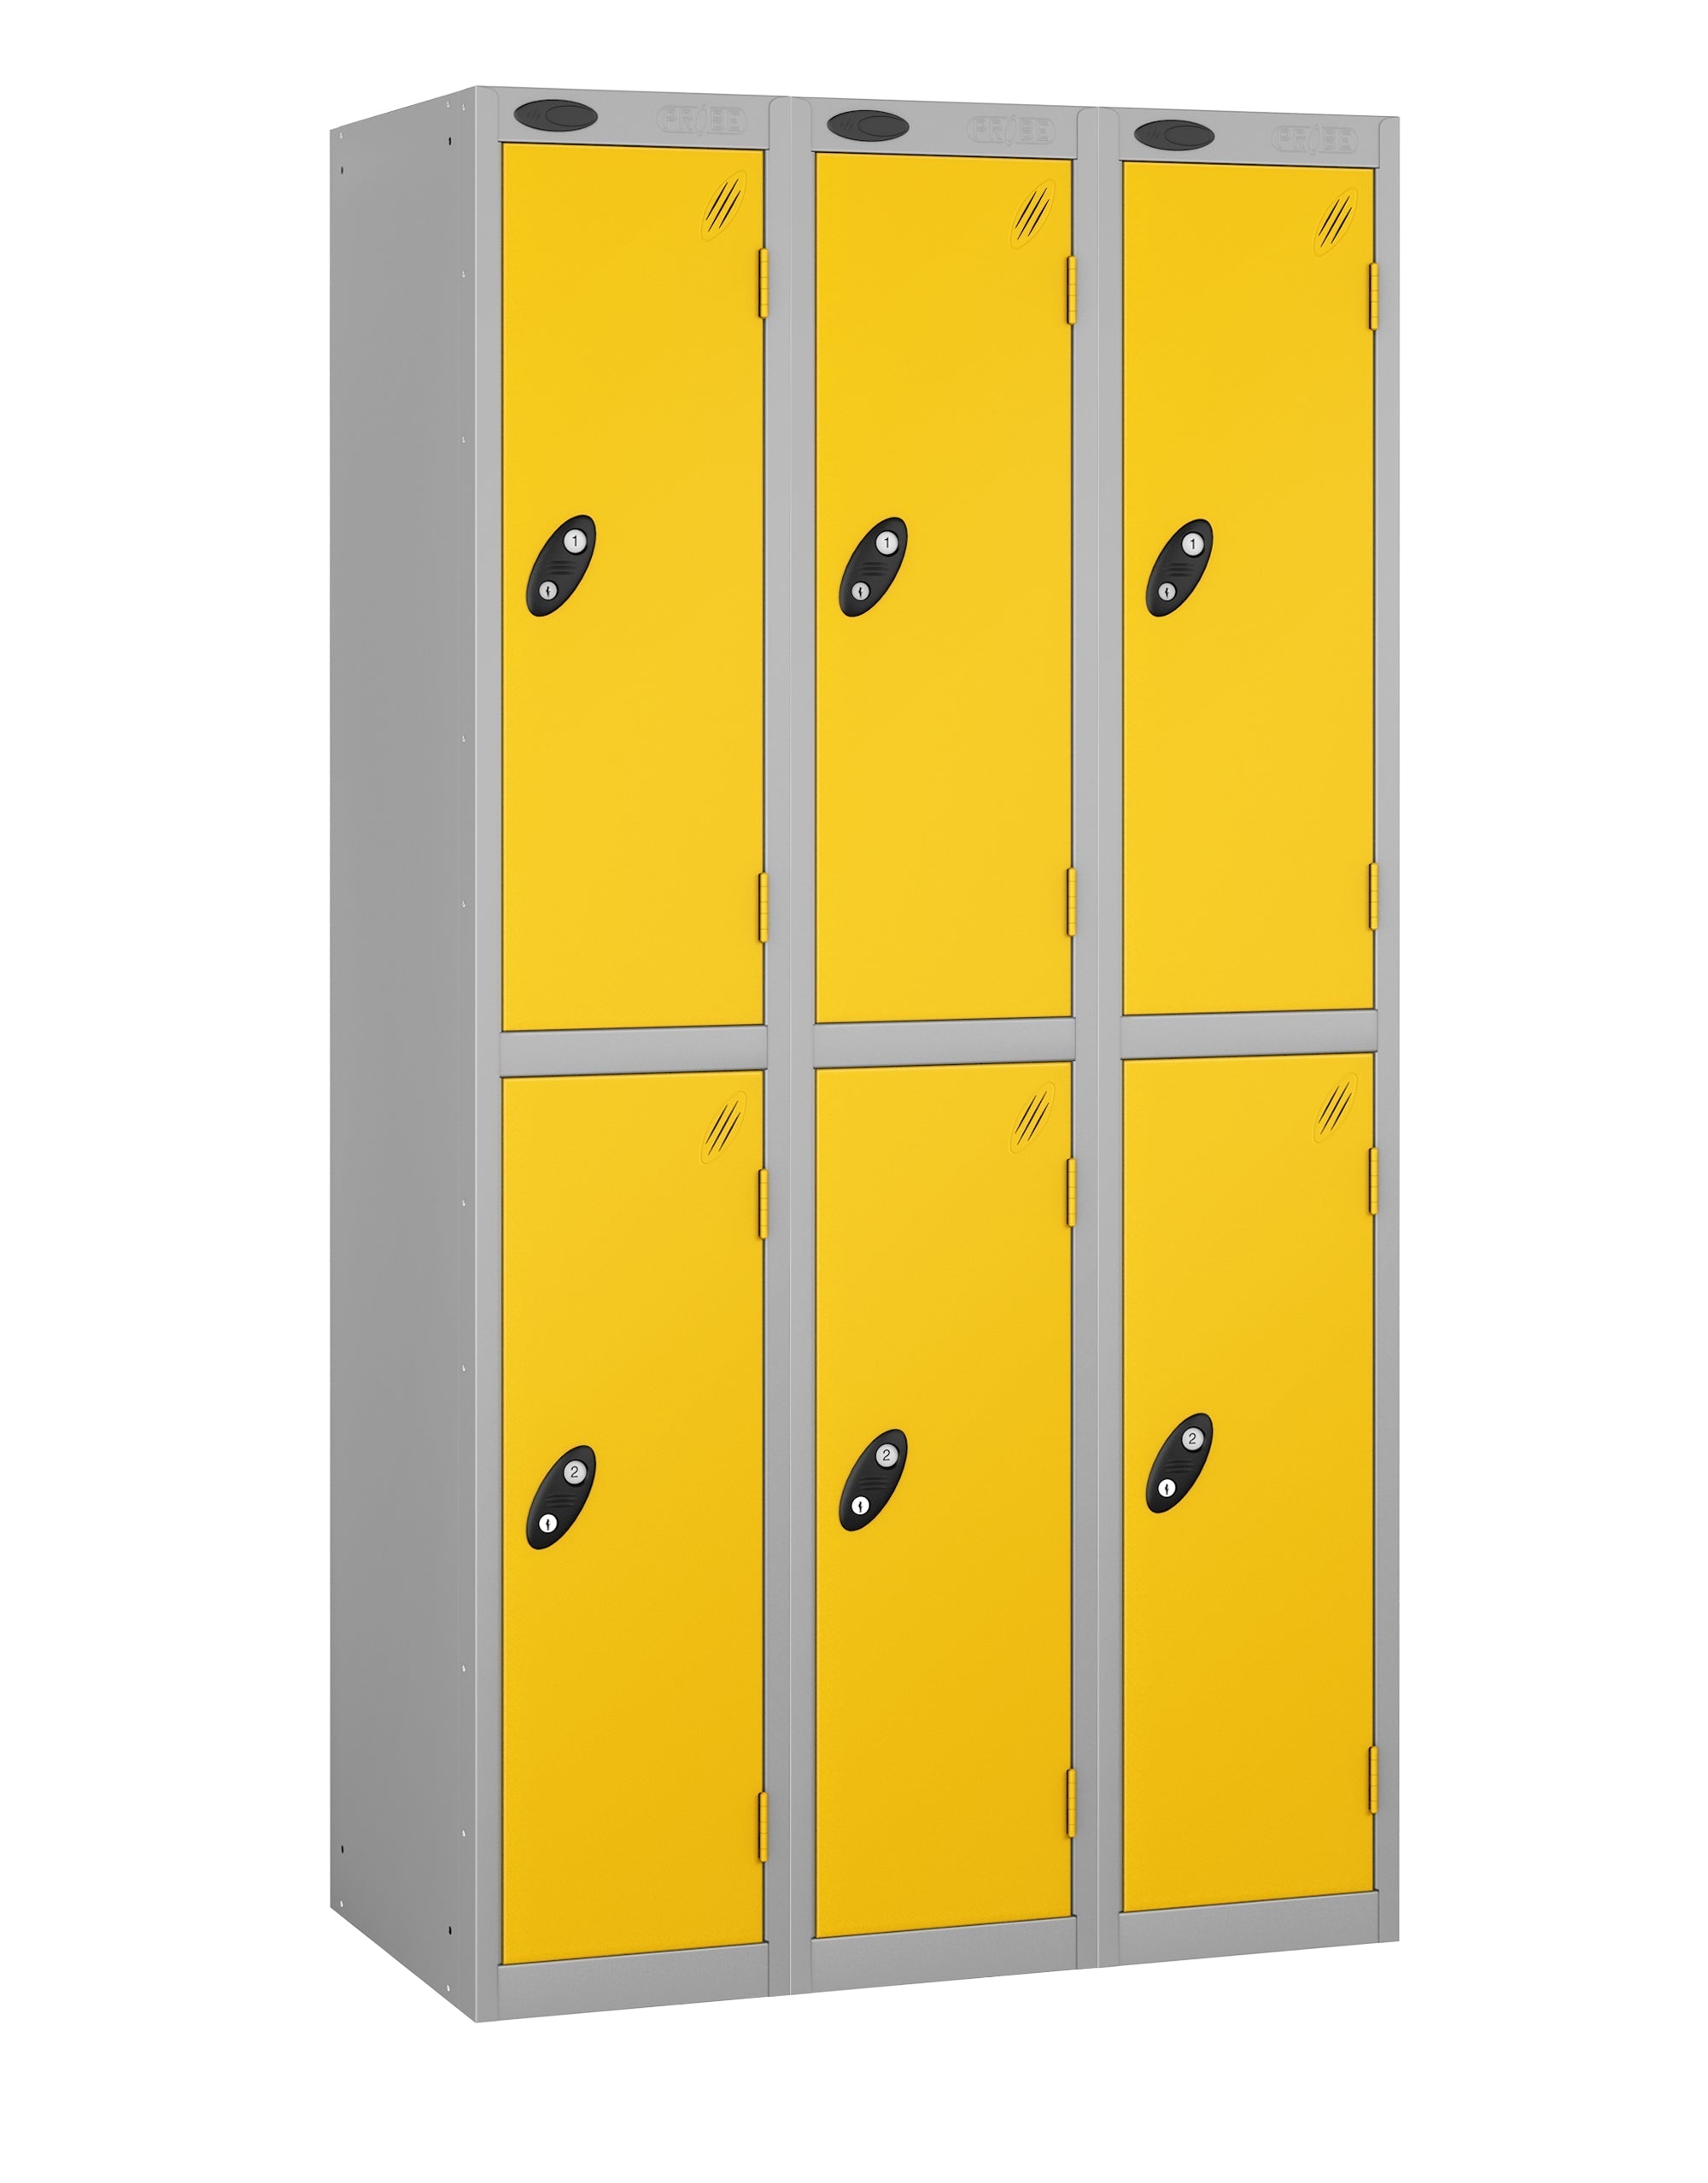 PROBELOW LOW LEVEL 3 NEST STEEL LOCKERS - ROYAL YELLOW 2 DOOR Storage Lockers > Lockers > Cabinets > Storage > Probe > One Stop For Safety   